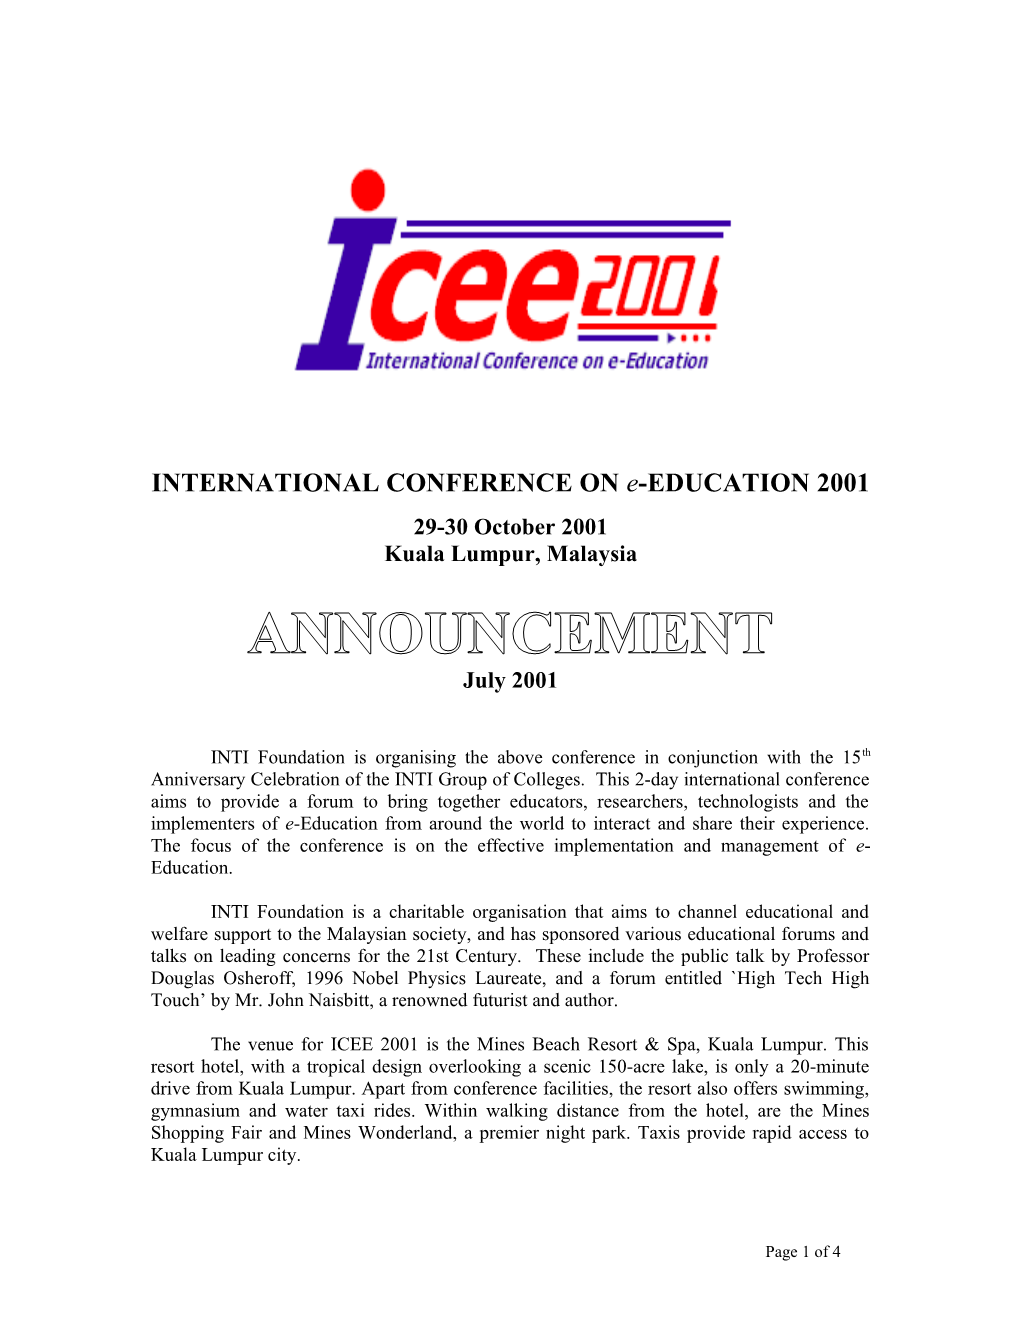 International Conference on E-Education 2001